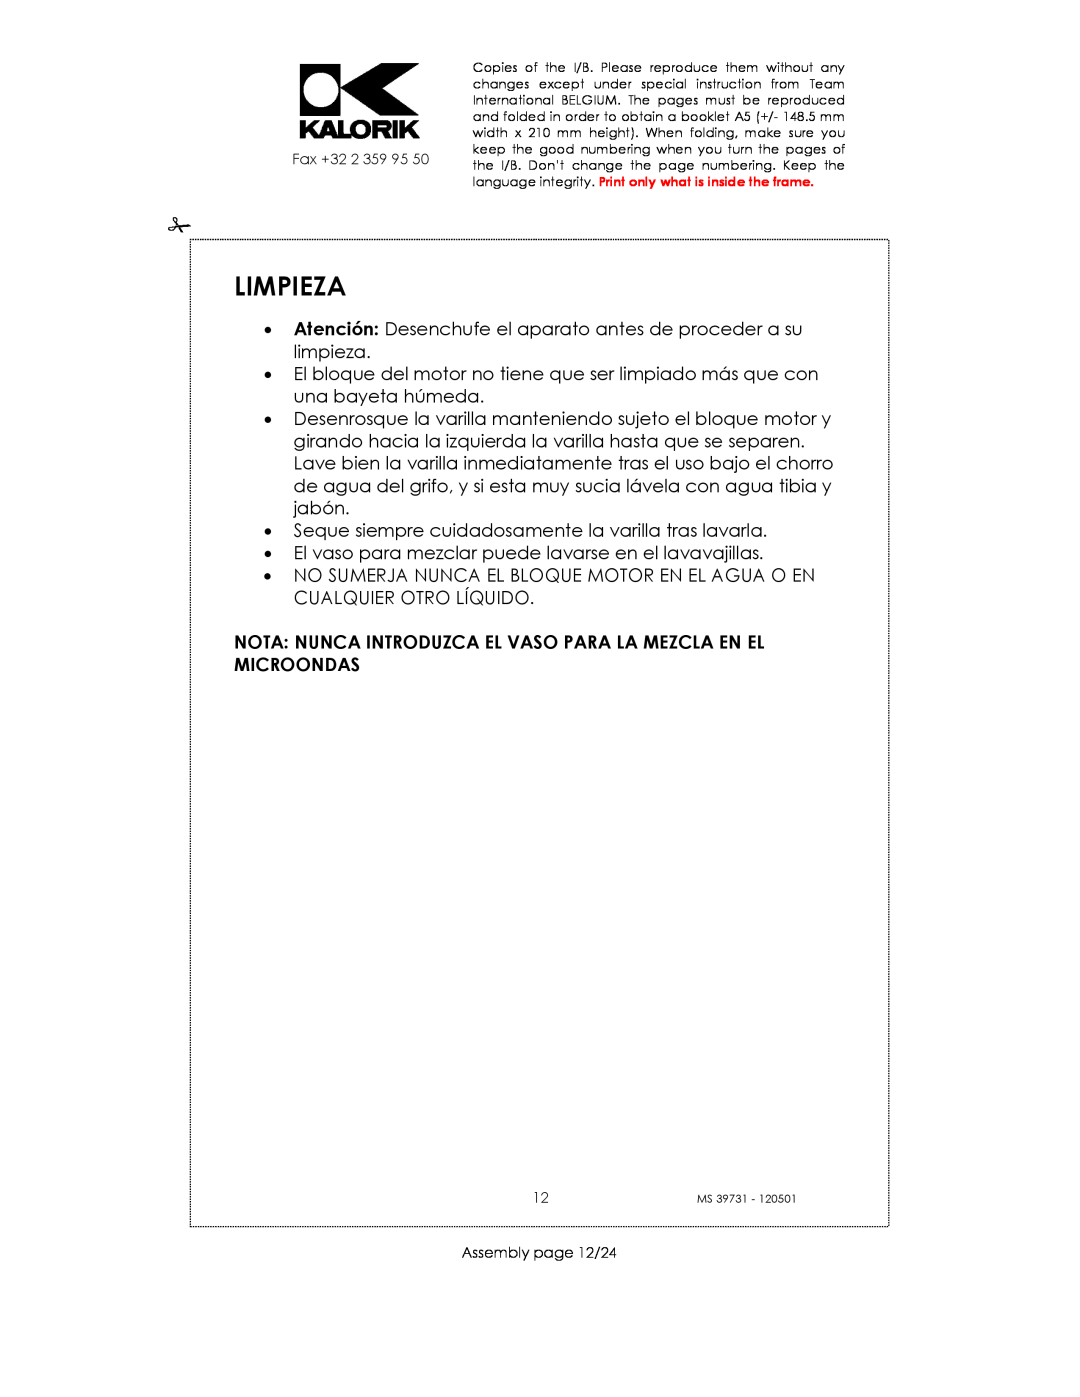 Kalorik MS 39731 manual Limpieza, Fax +32, Assembly page 12/24 